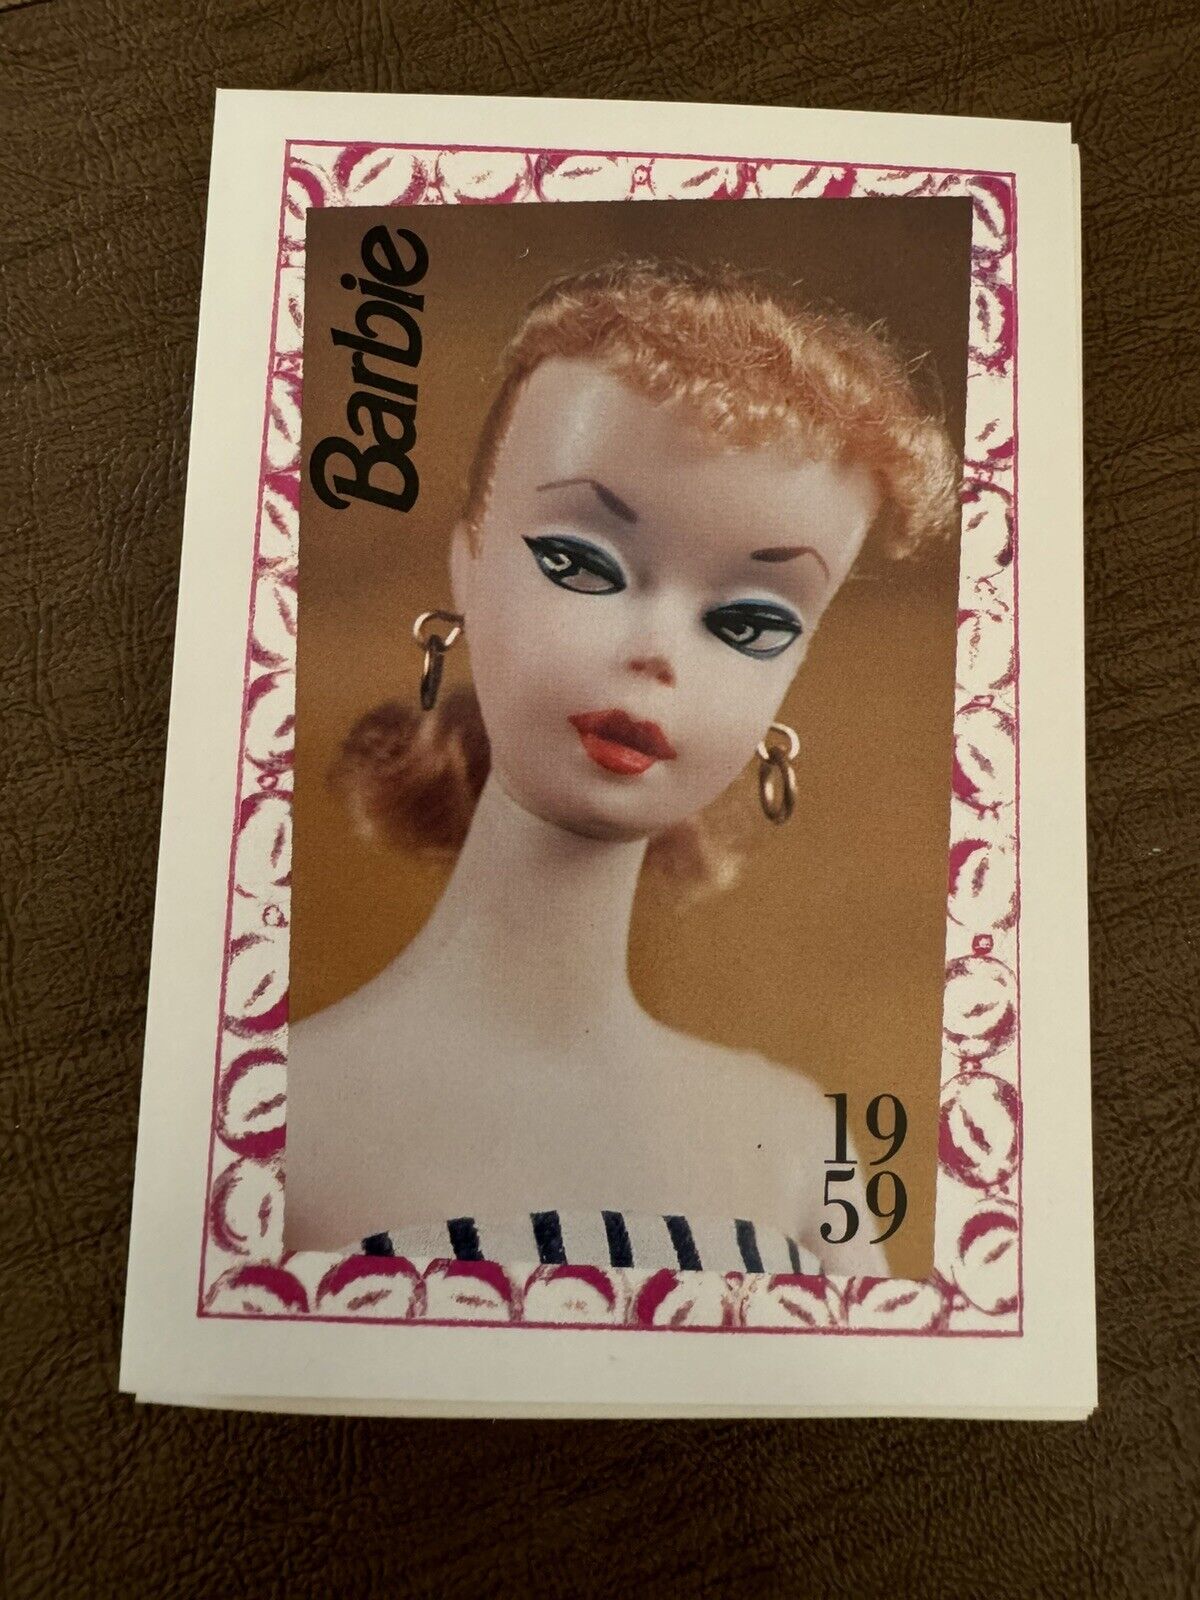 Barbie 1991 Trade Up Mini Set Of 35 Cards. I Have More Lets Talk